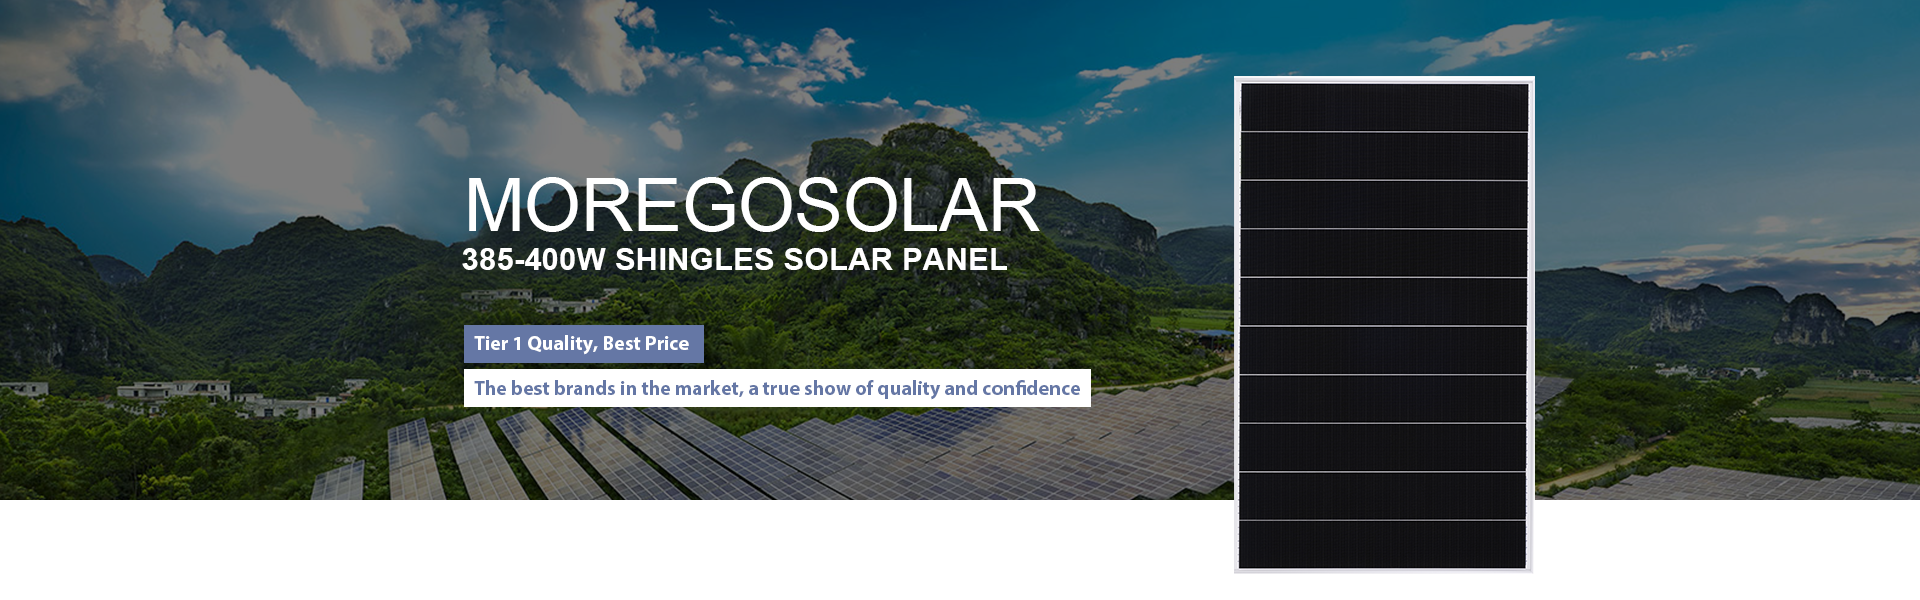 shingles solar panel 400w